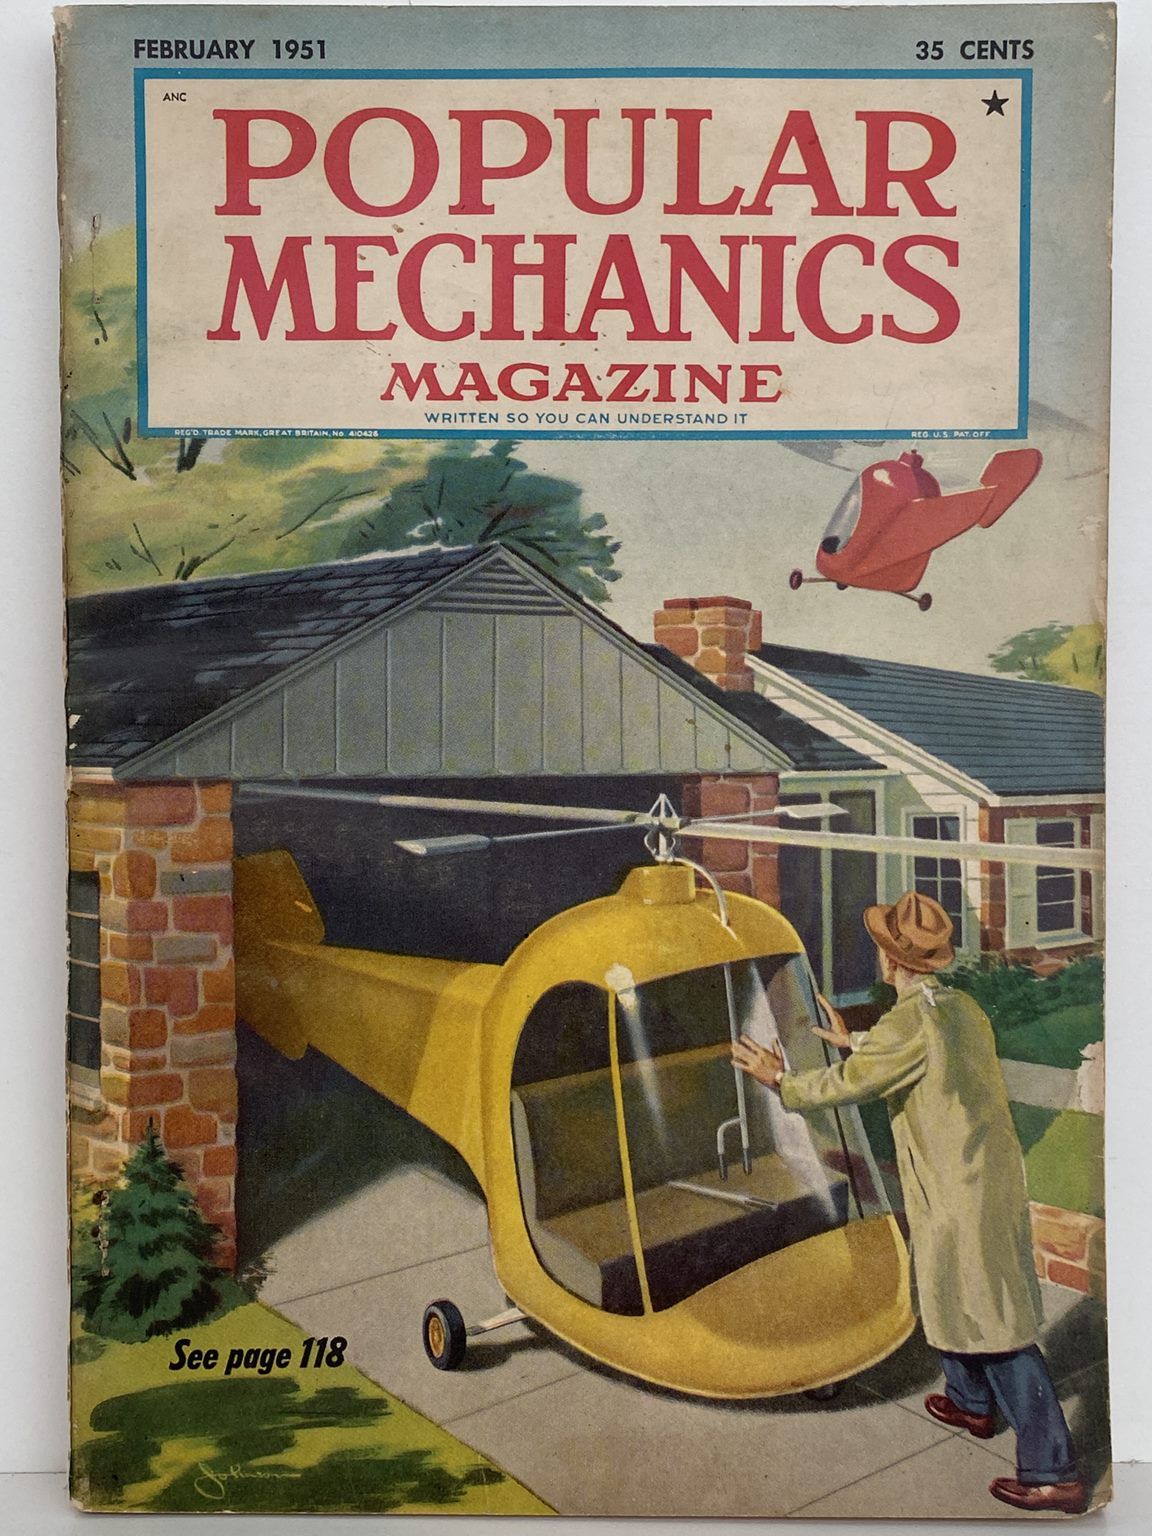 VINTAGE MAGAZINE: Popular Mechanics - Vol. 95, No. 2 - February 1951